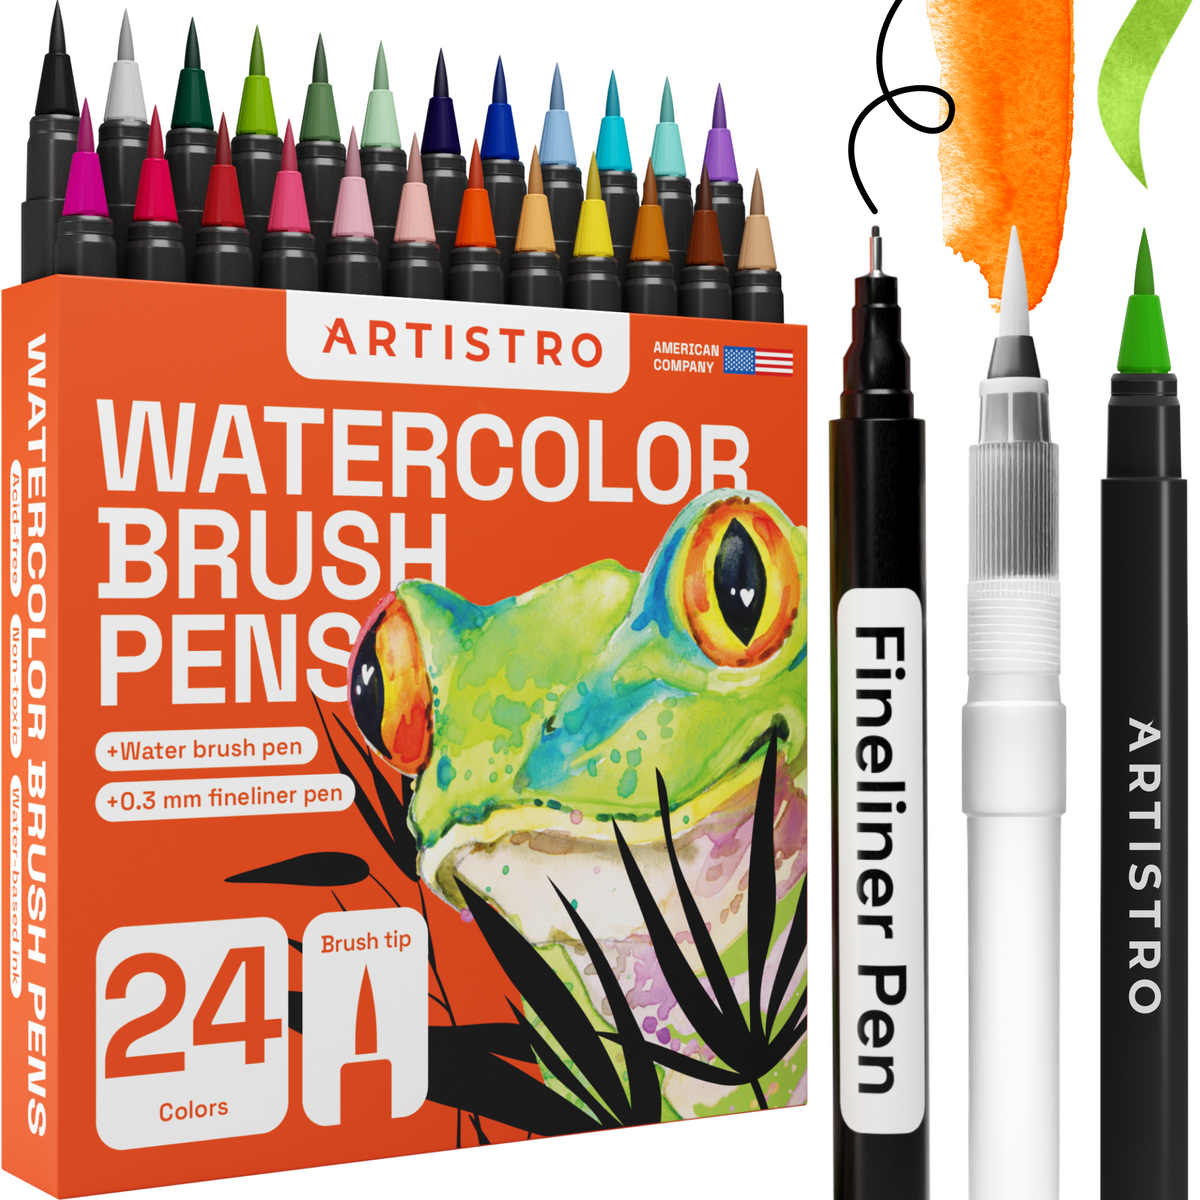 Watercolor Brush Pen Tutorials! Easy beginner step-by-step brush